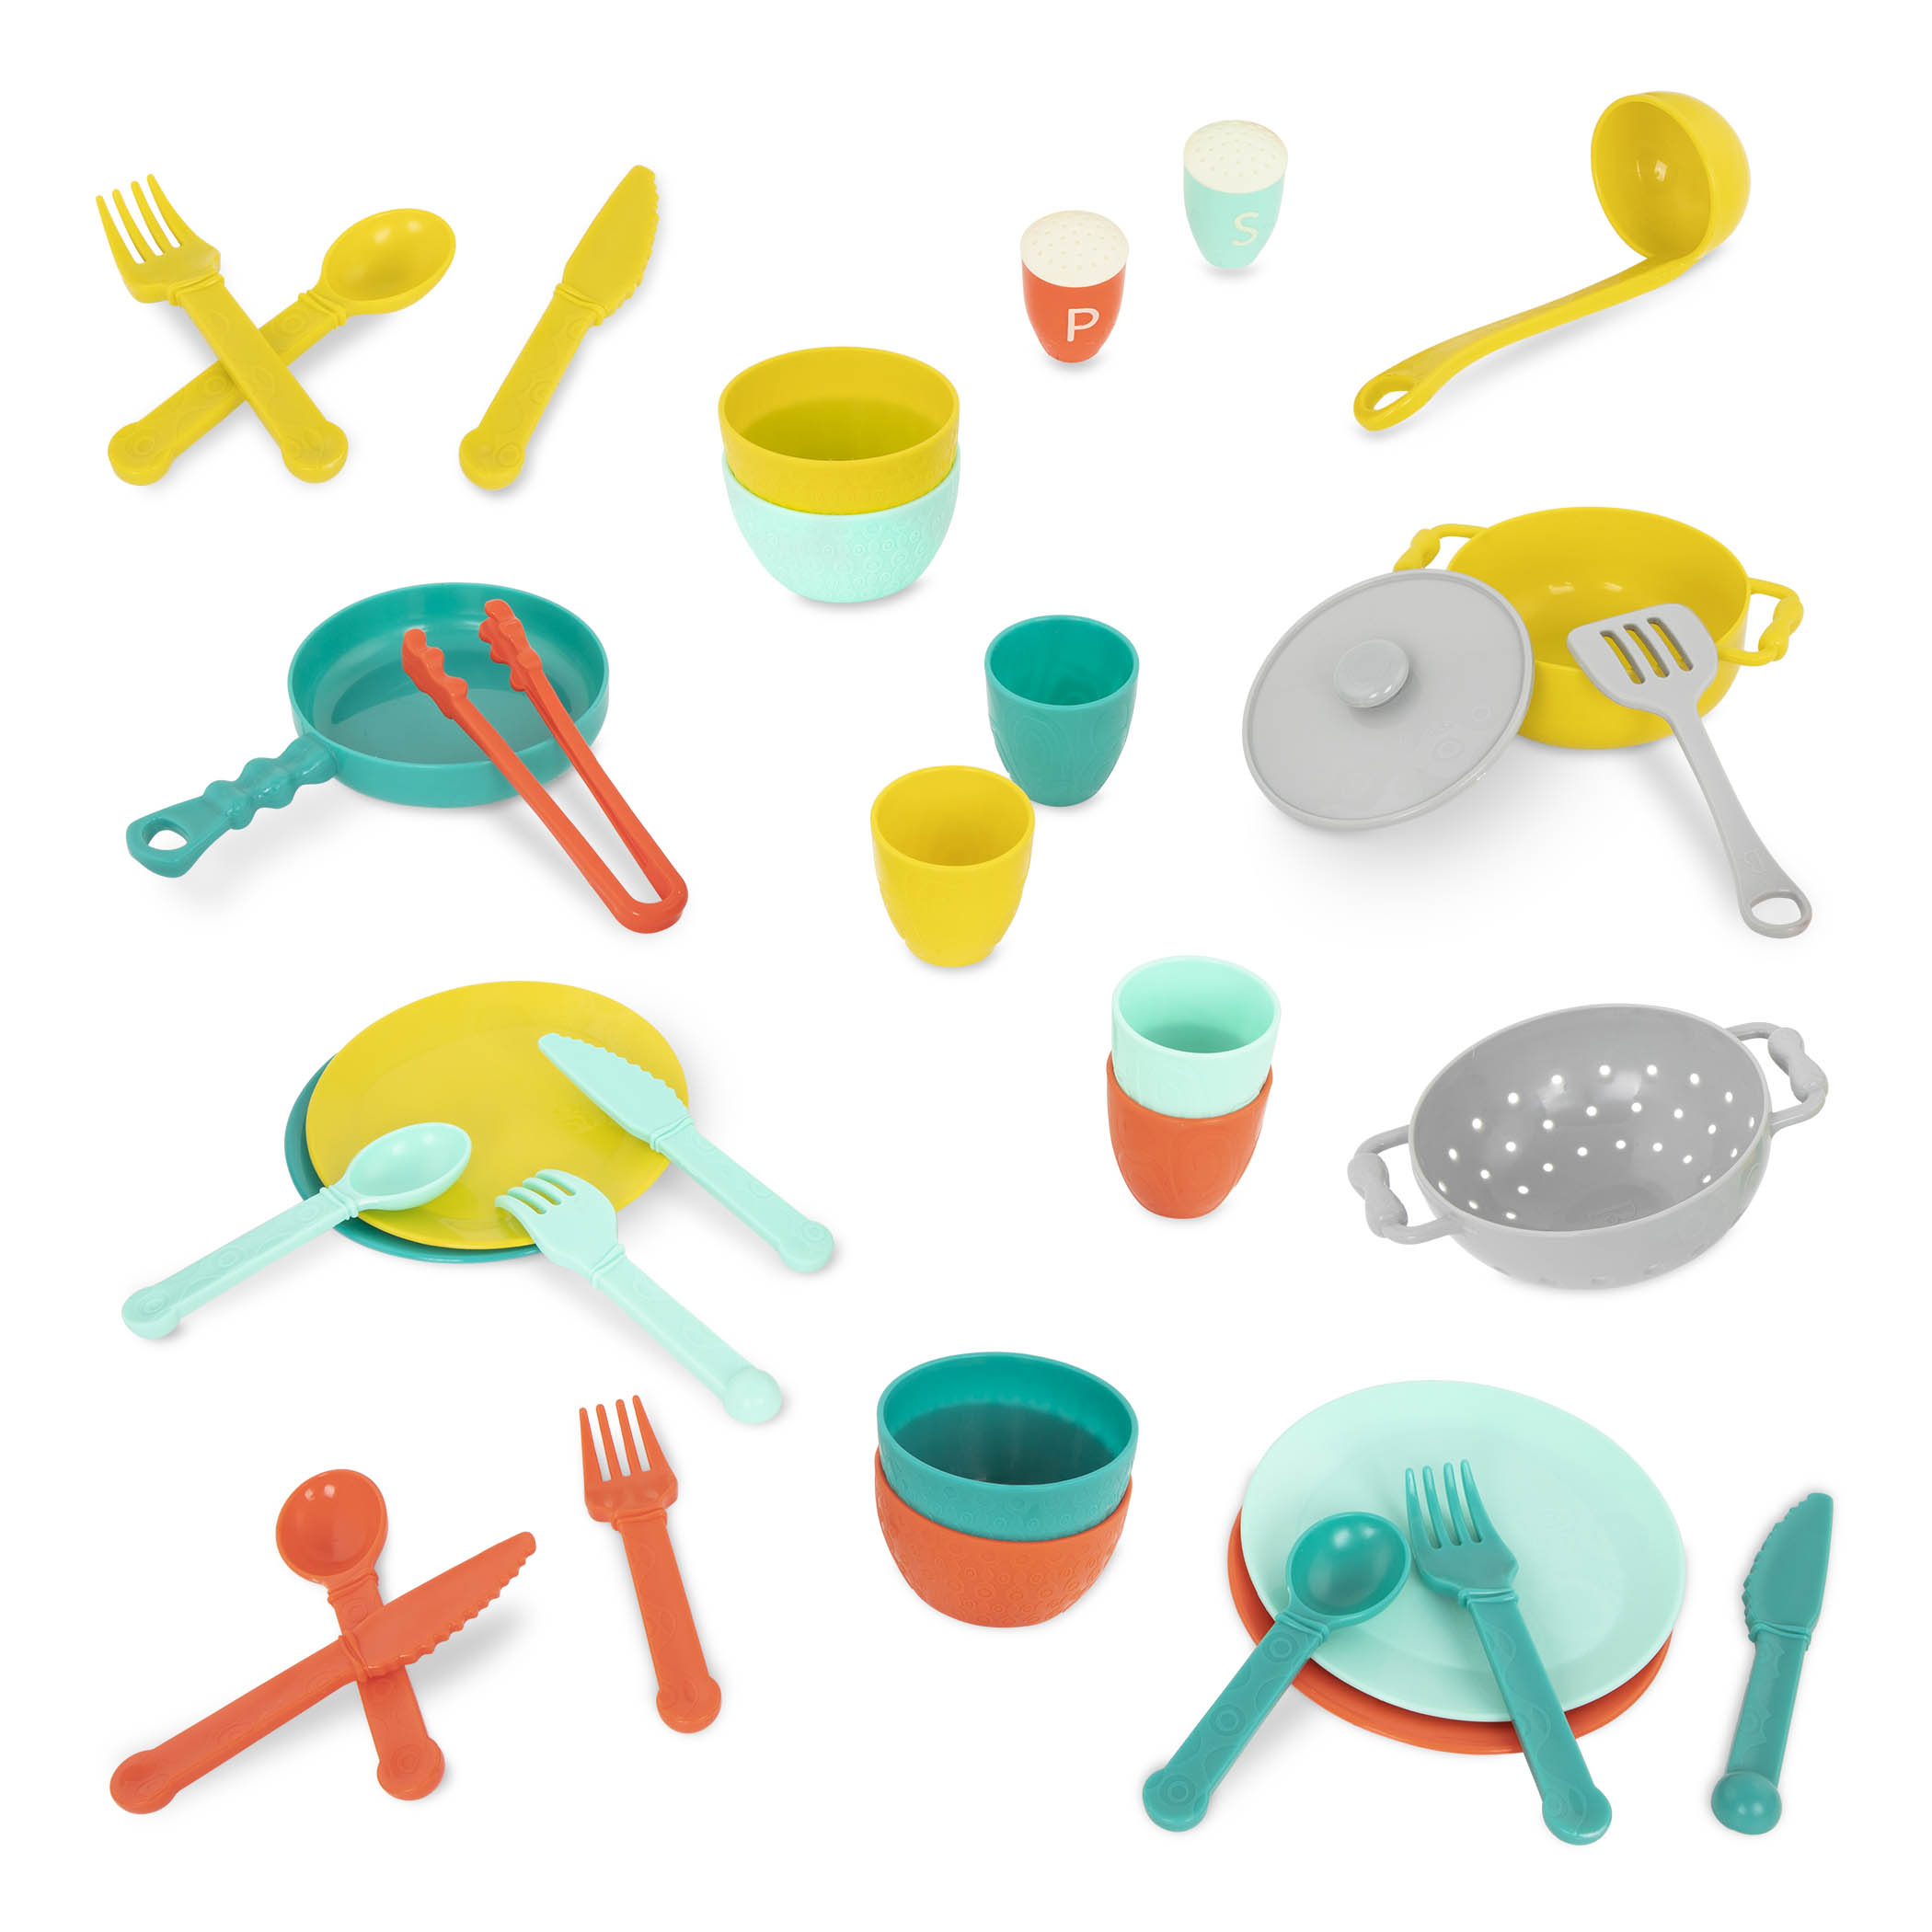 Plastic Kitchen Cooking Accessories